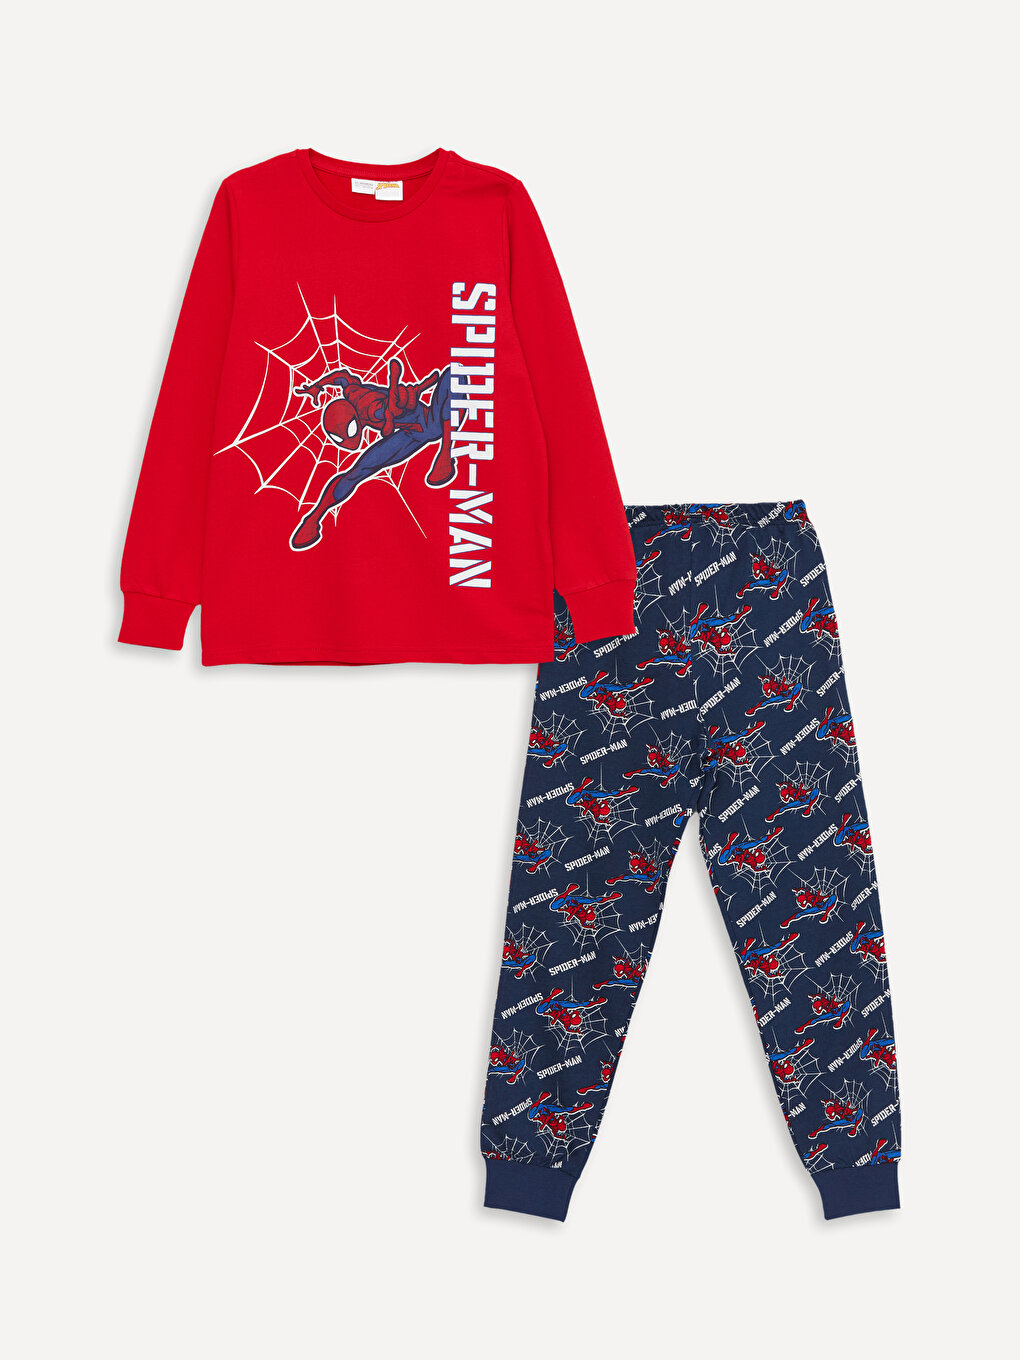 Pijama Spiderman